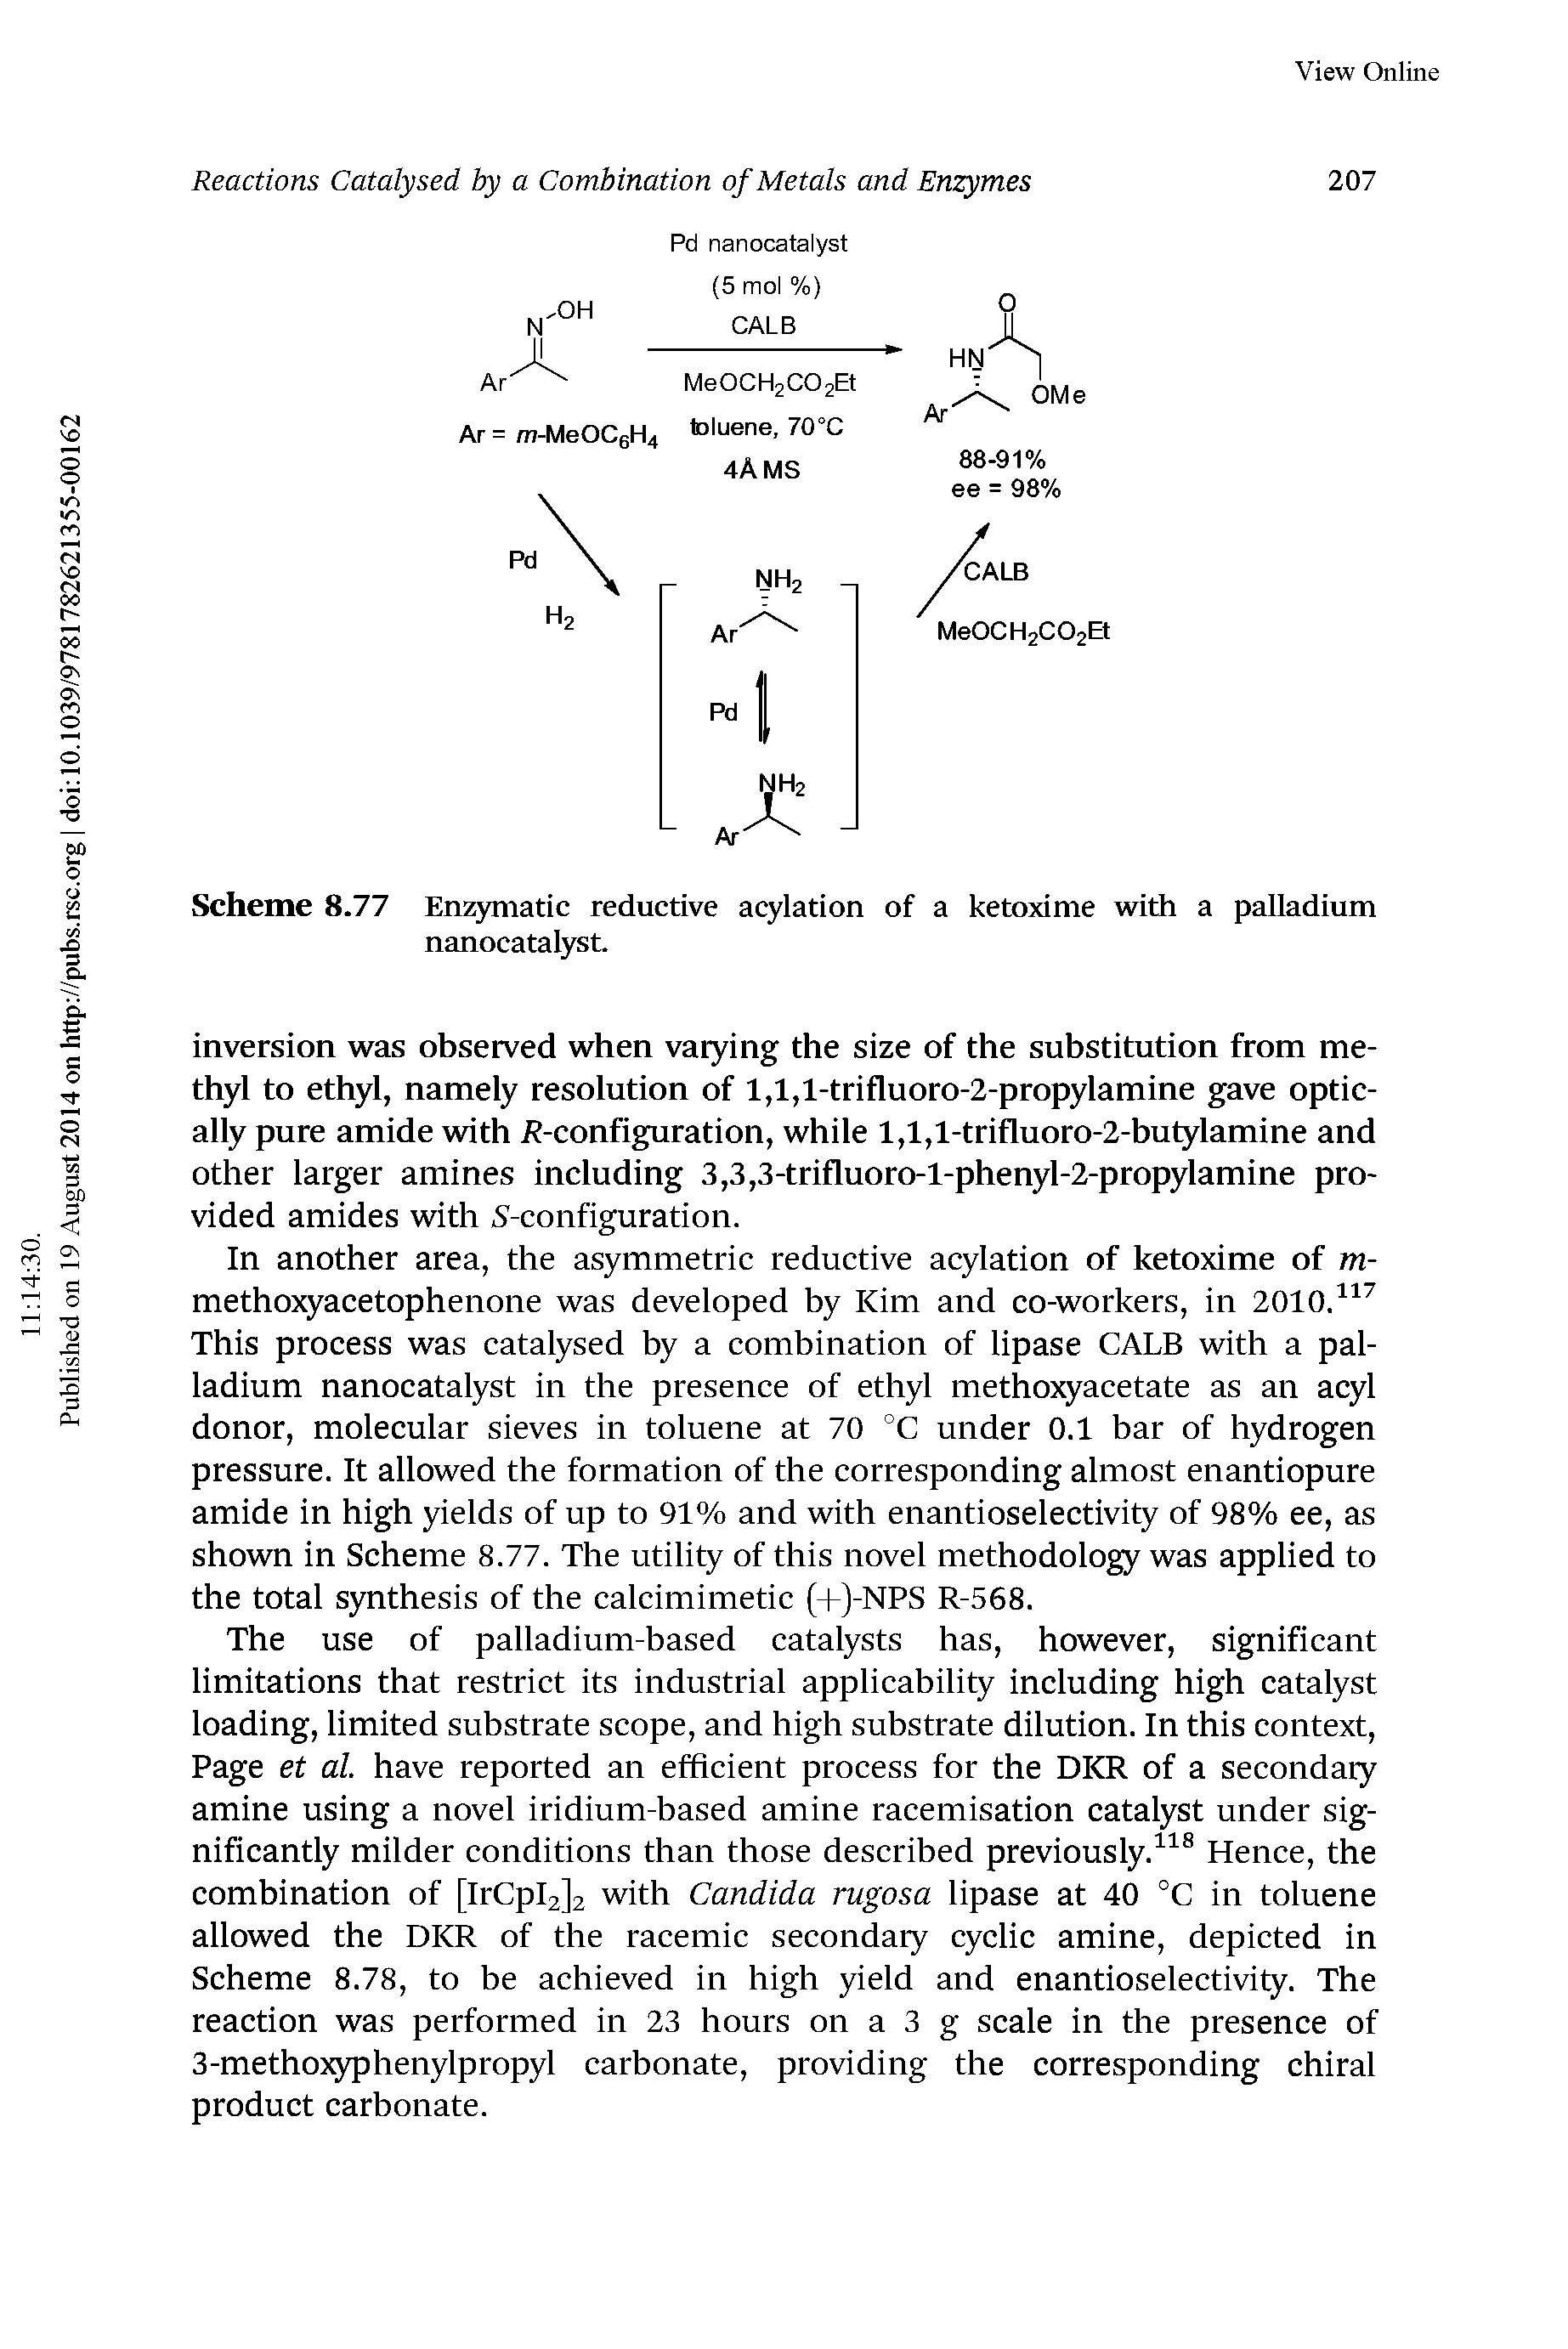 Scheme 8.77 Enz)matic reductive acylation of a ketoxime with a palladium nanocatalyst.